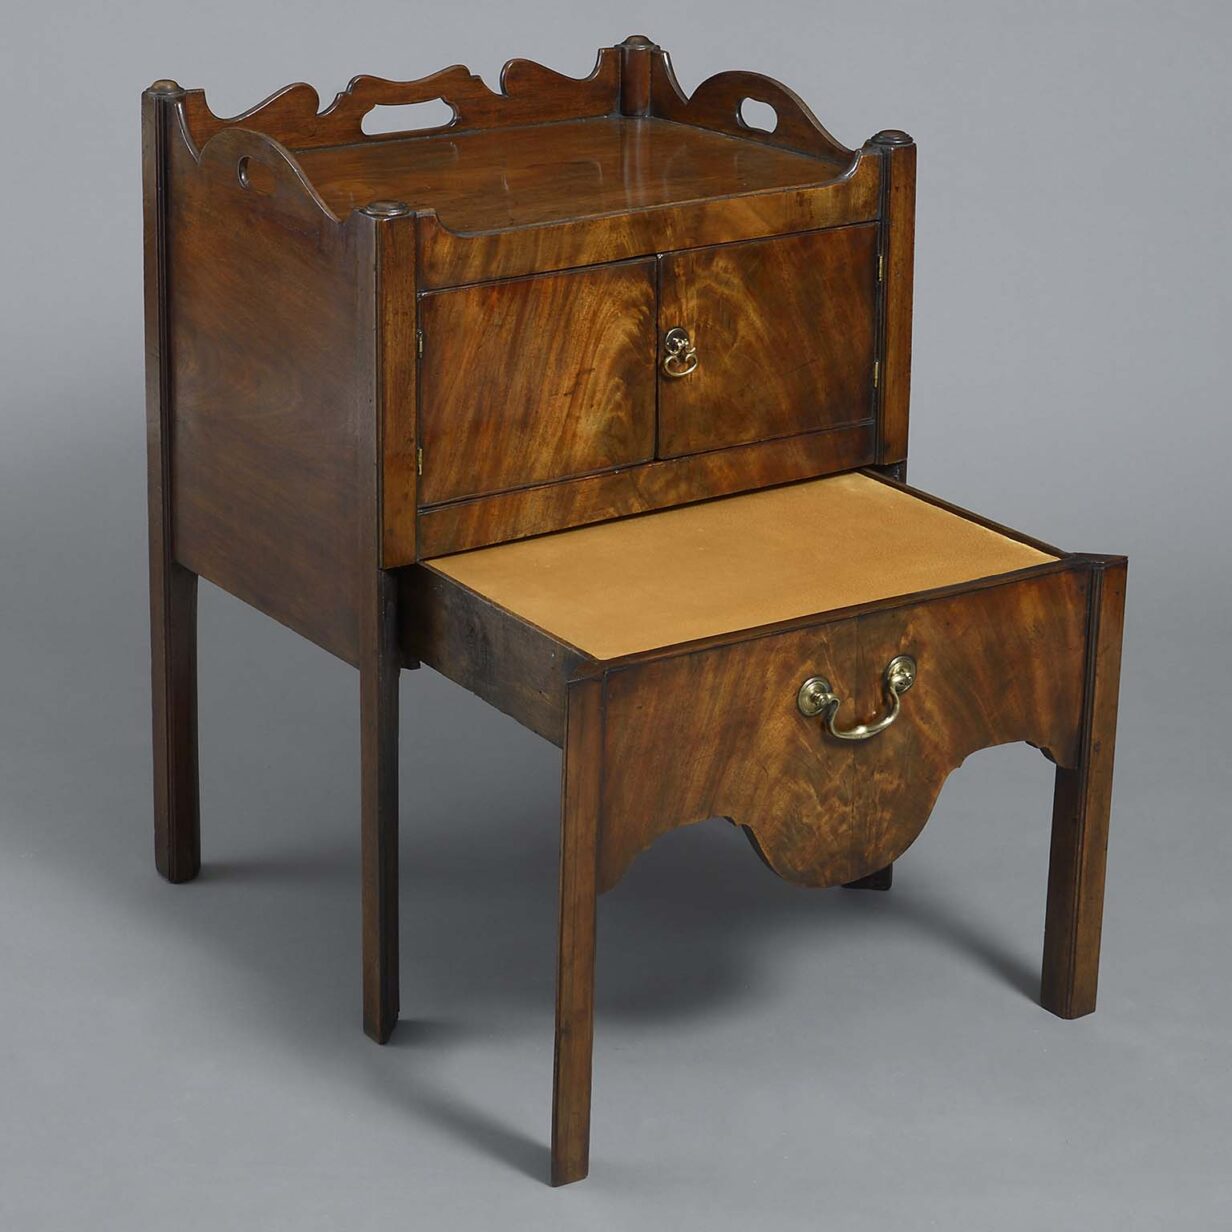 Pair of mid-eighteenth century george iii period mahogany bedside cabinets